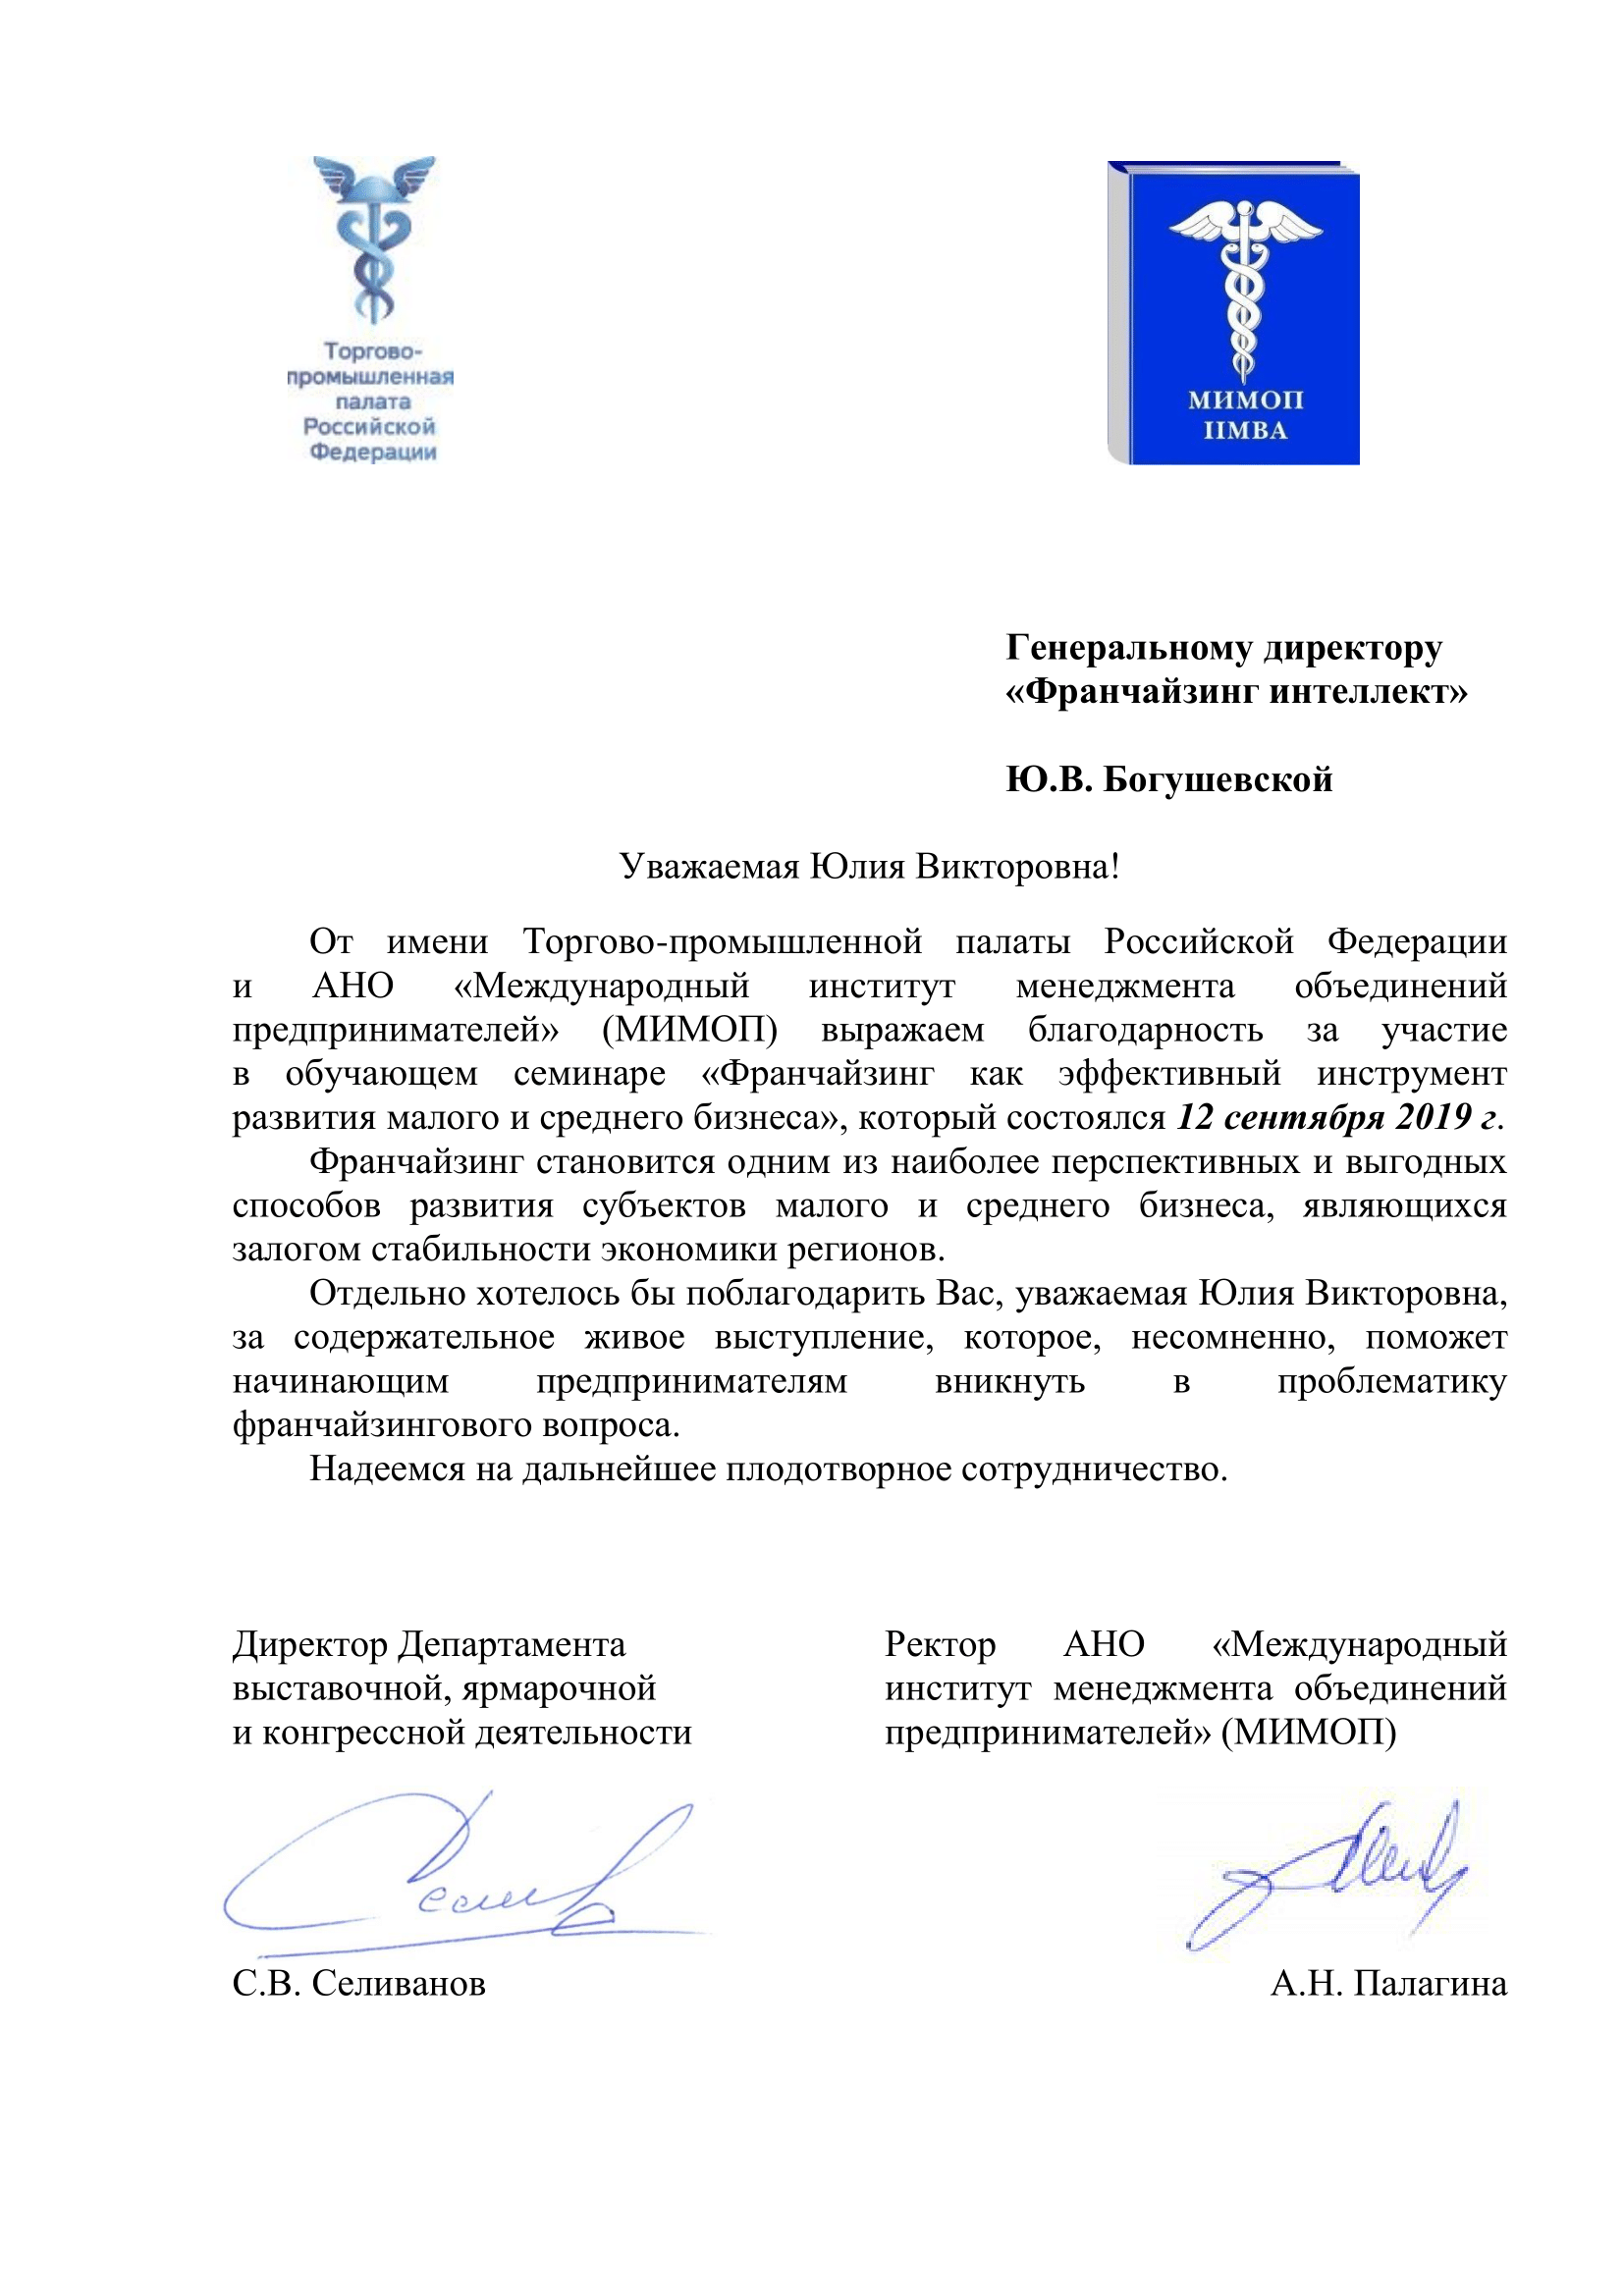 Ю.В.Богушевской от ТПП РФ-1.png